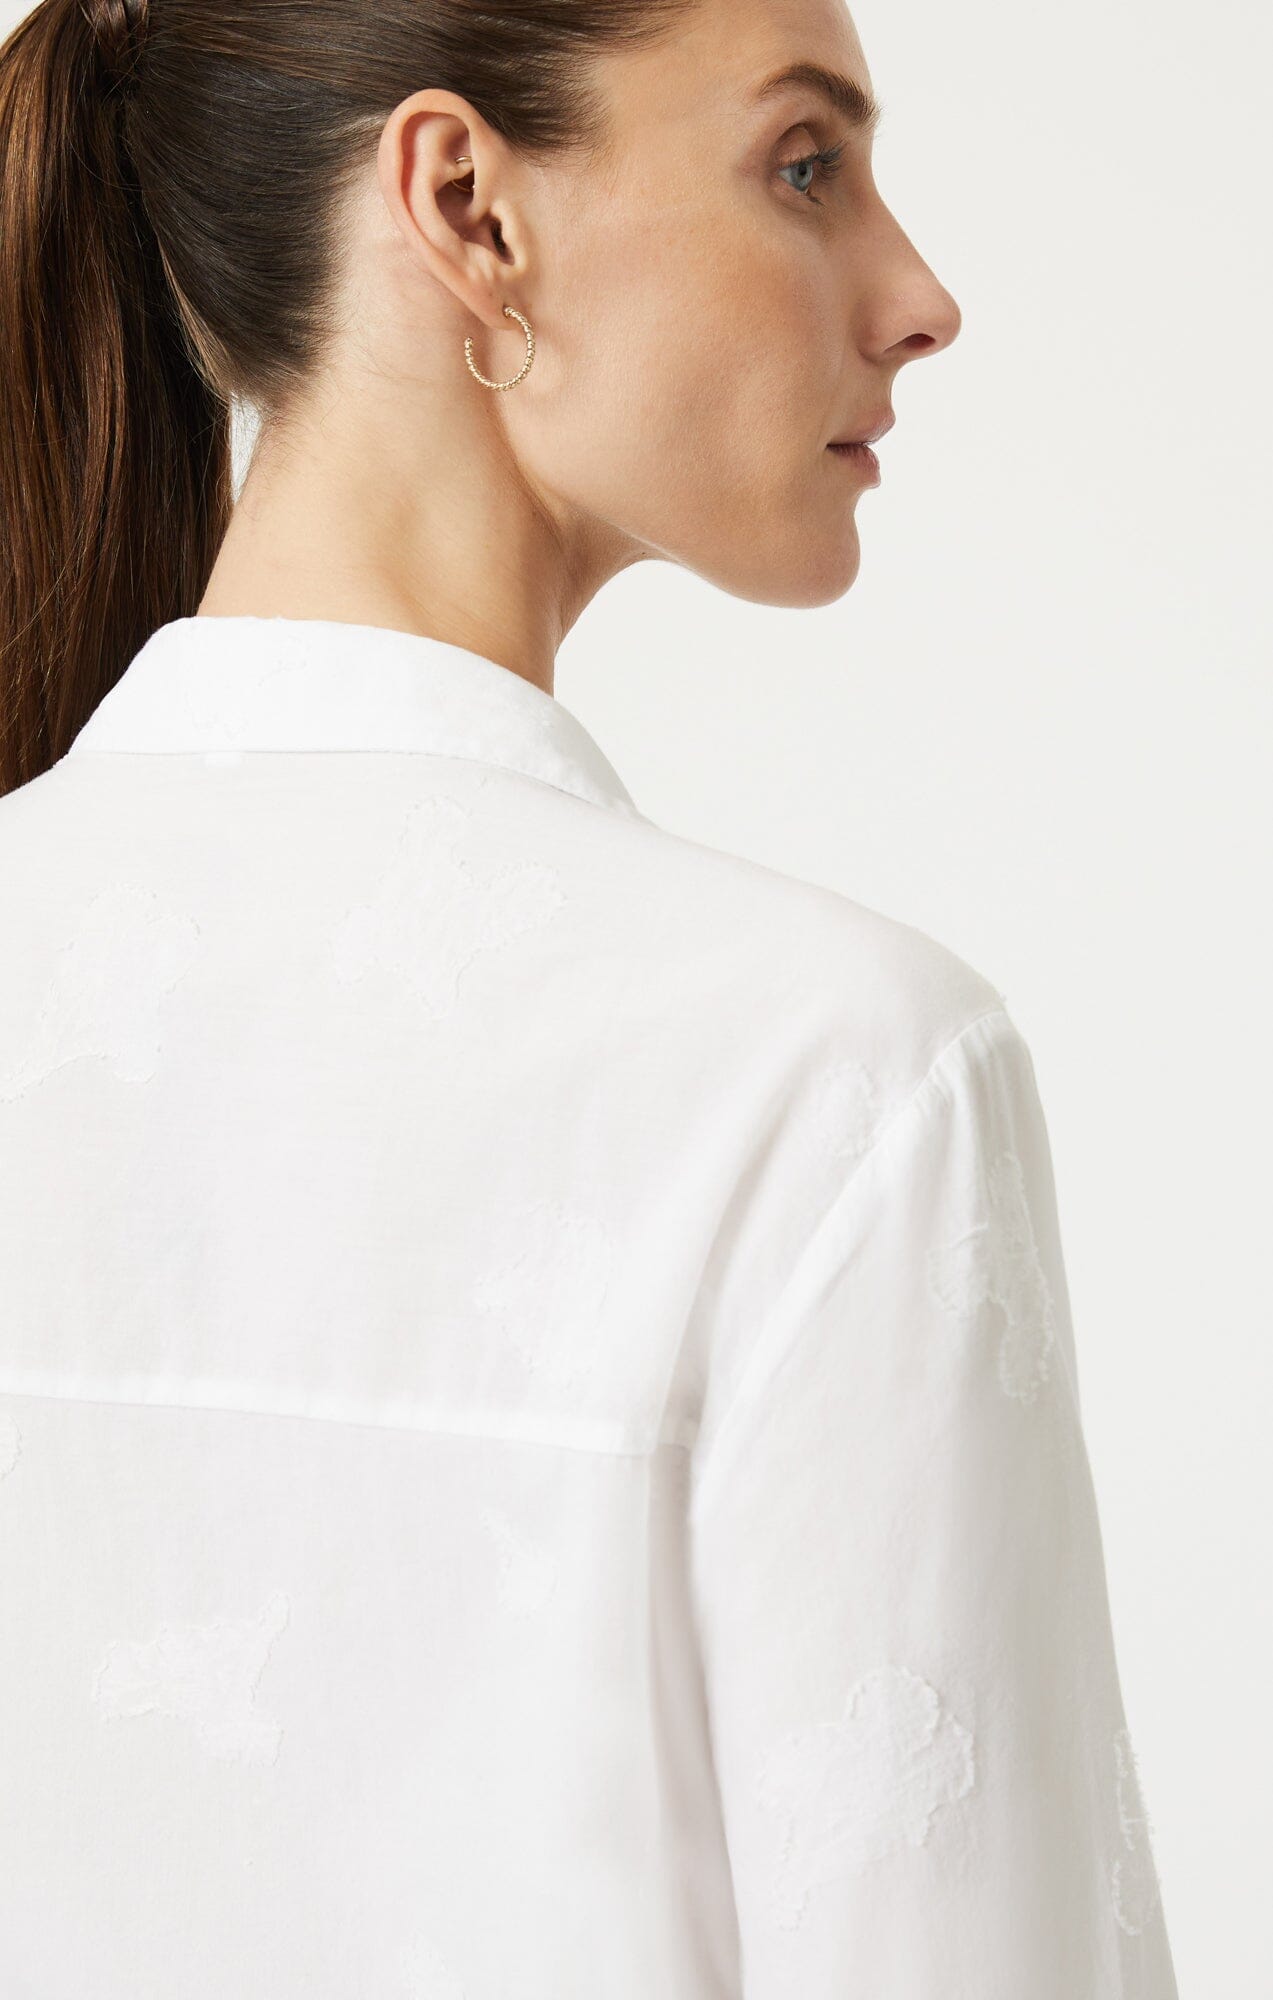 Mavi Women's Jacquard Button-Up Shirt In Antique White